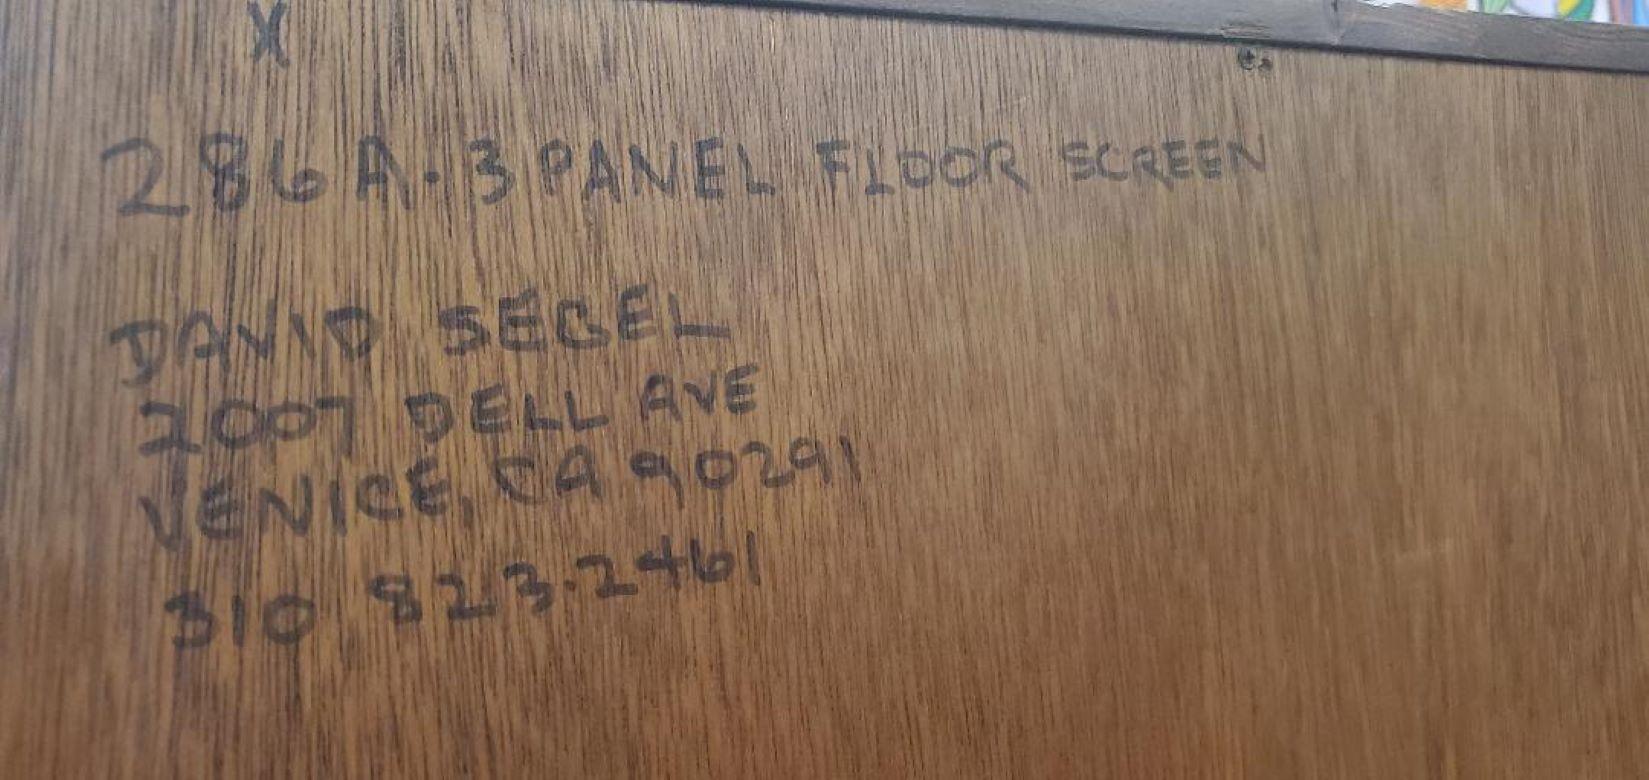 David Segel 3 Panel Floor Screen Signed & Titled 